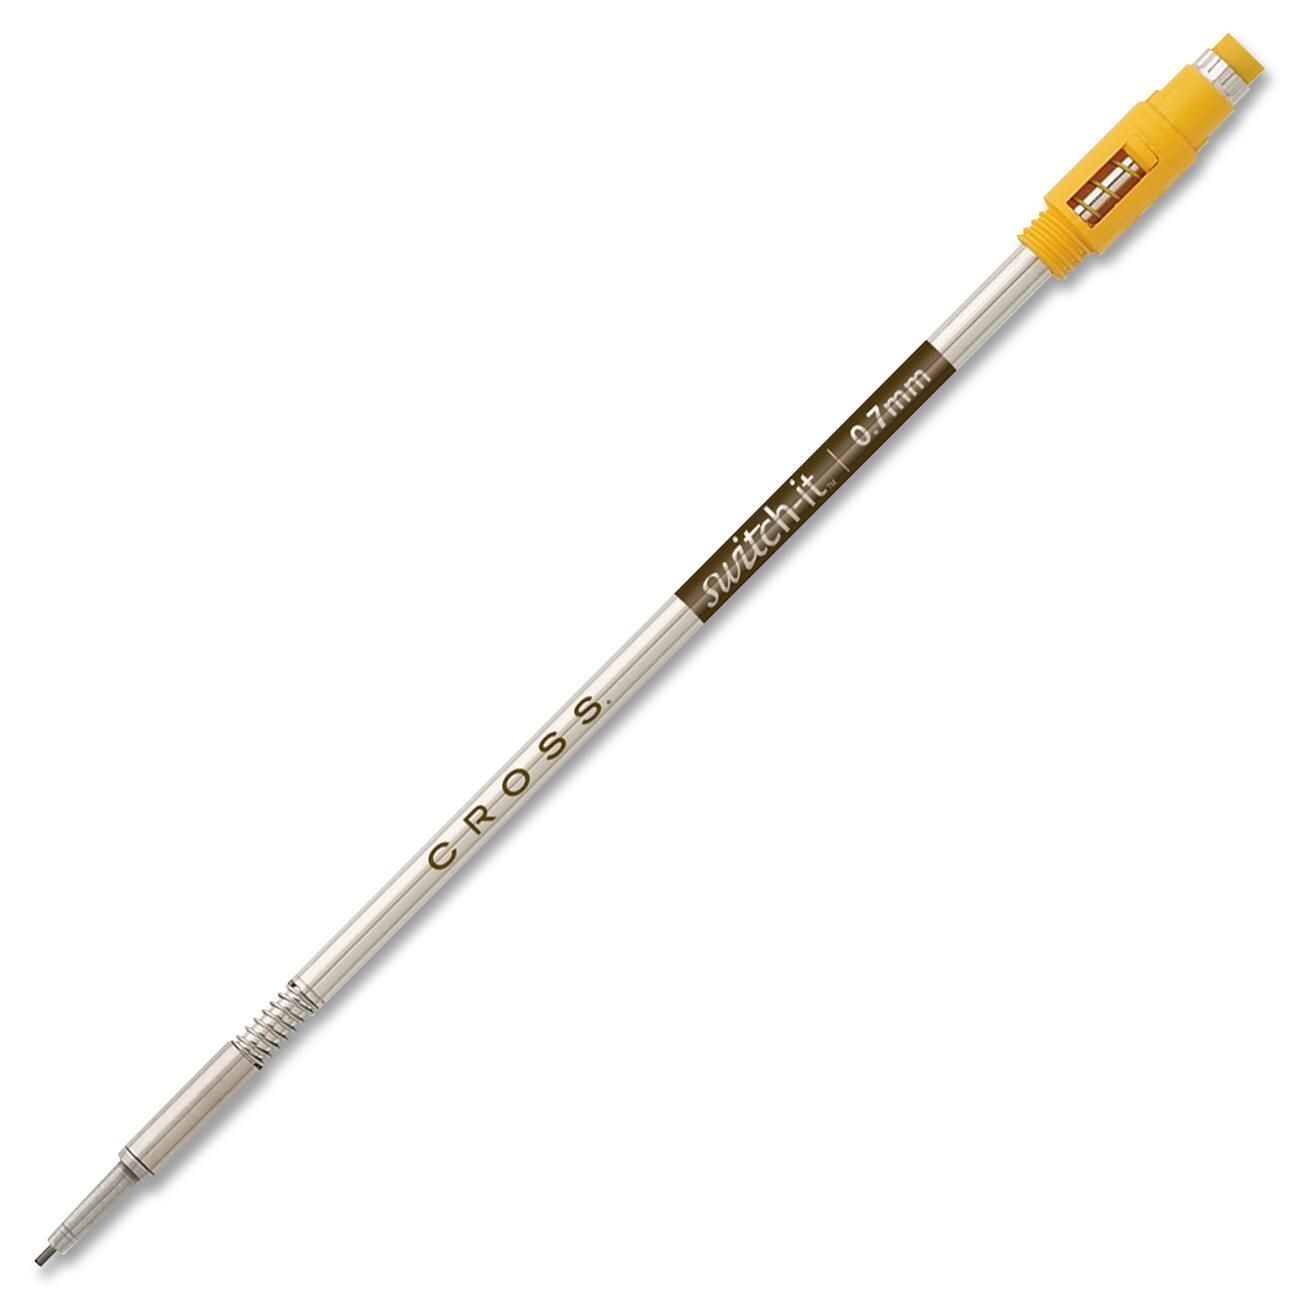 Конвертер Cross Switch It 0.7мм для шариковых ручек + 2 ластика (Cross 8780) Ручки и карандаши